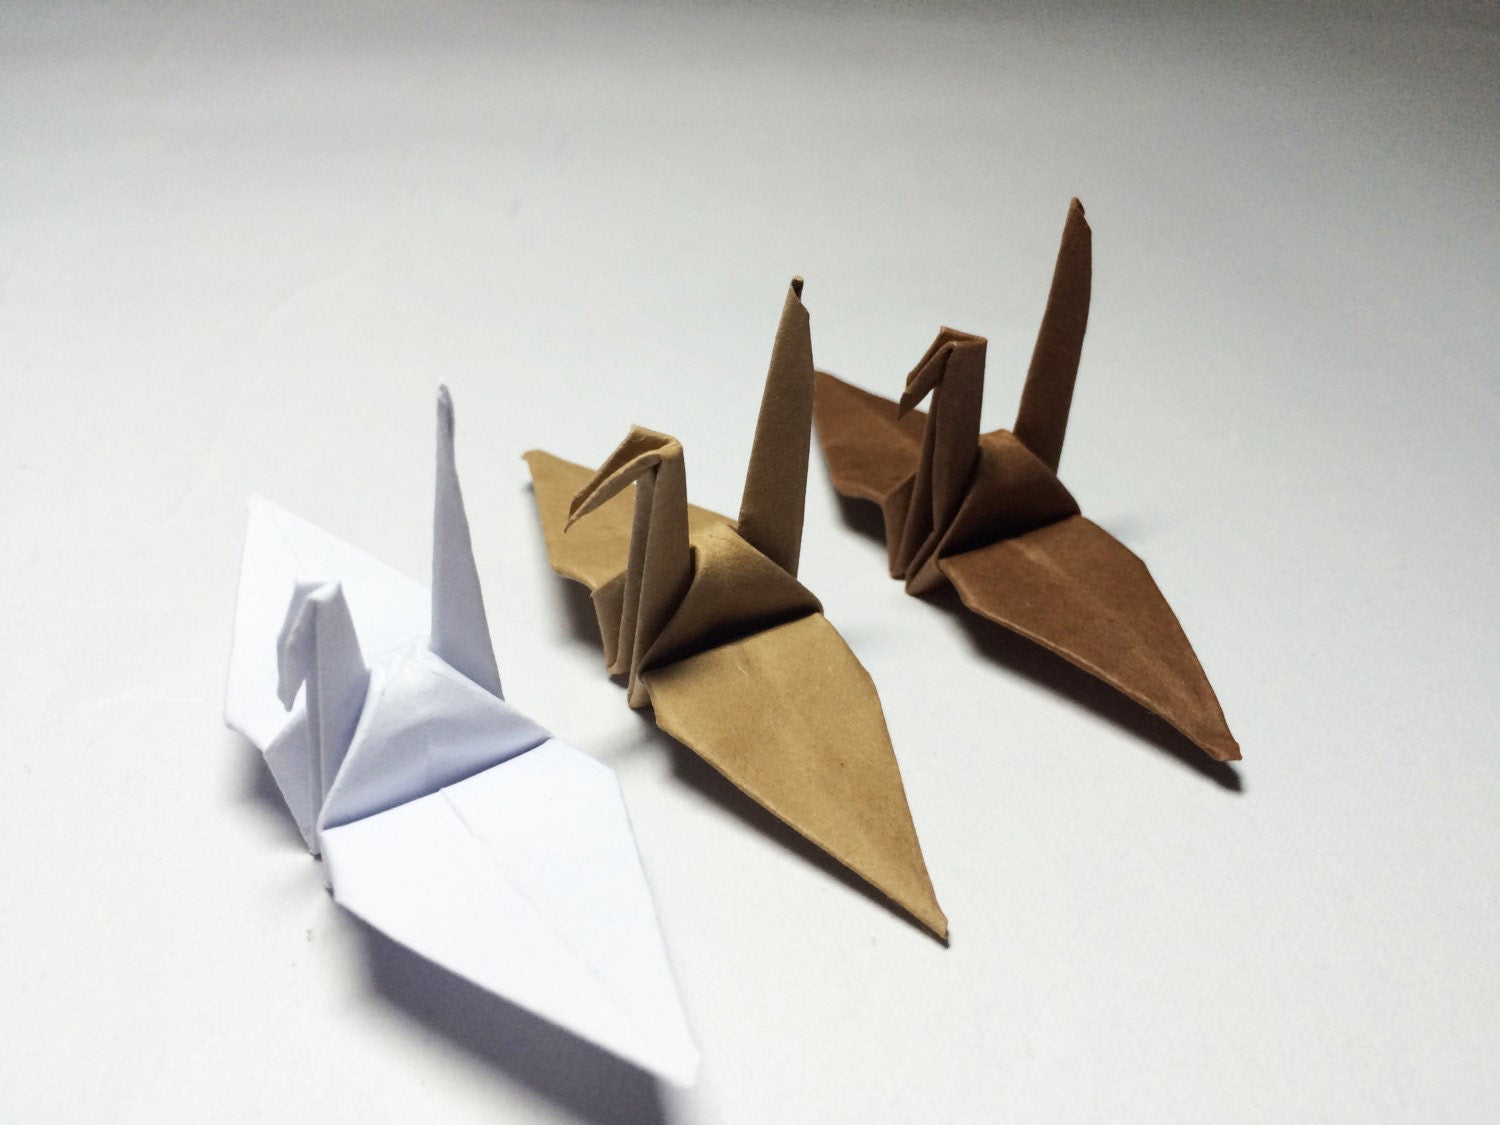 100 Brown Origami Paper Crane 3x3 inches (7.5 cm) Pre Made Origami Crane for Wedding Decor, Anniversary Gift, Valentines, Backdrop